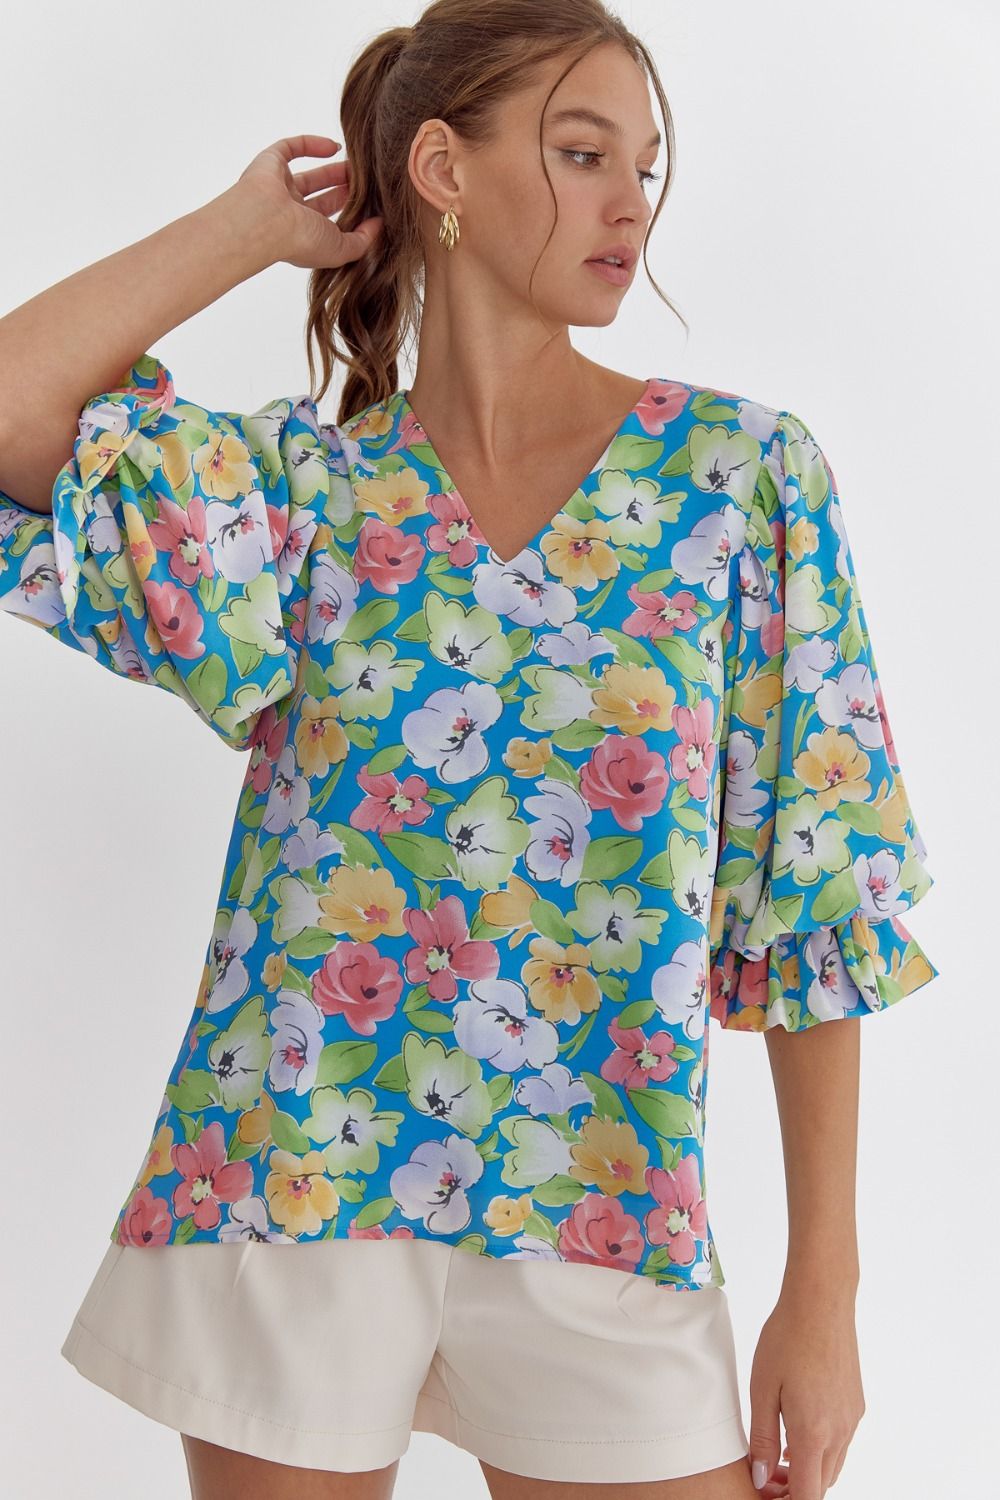 ENTRO INC Women's Top Floral Print V-Neck 3/4 Sleeve Top || David's Clothing